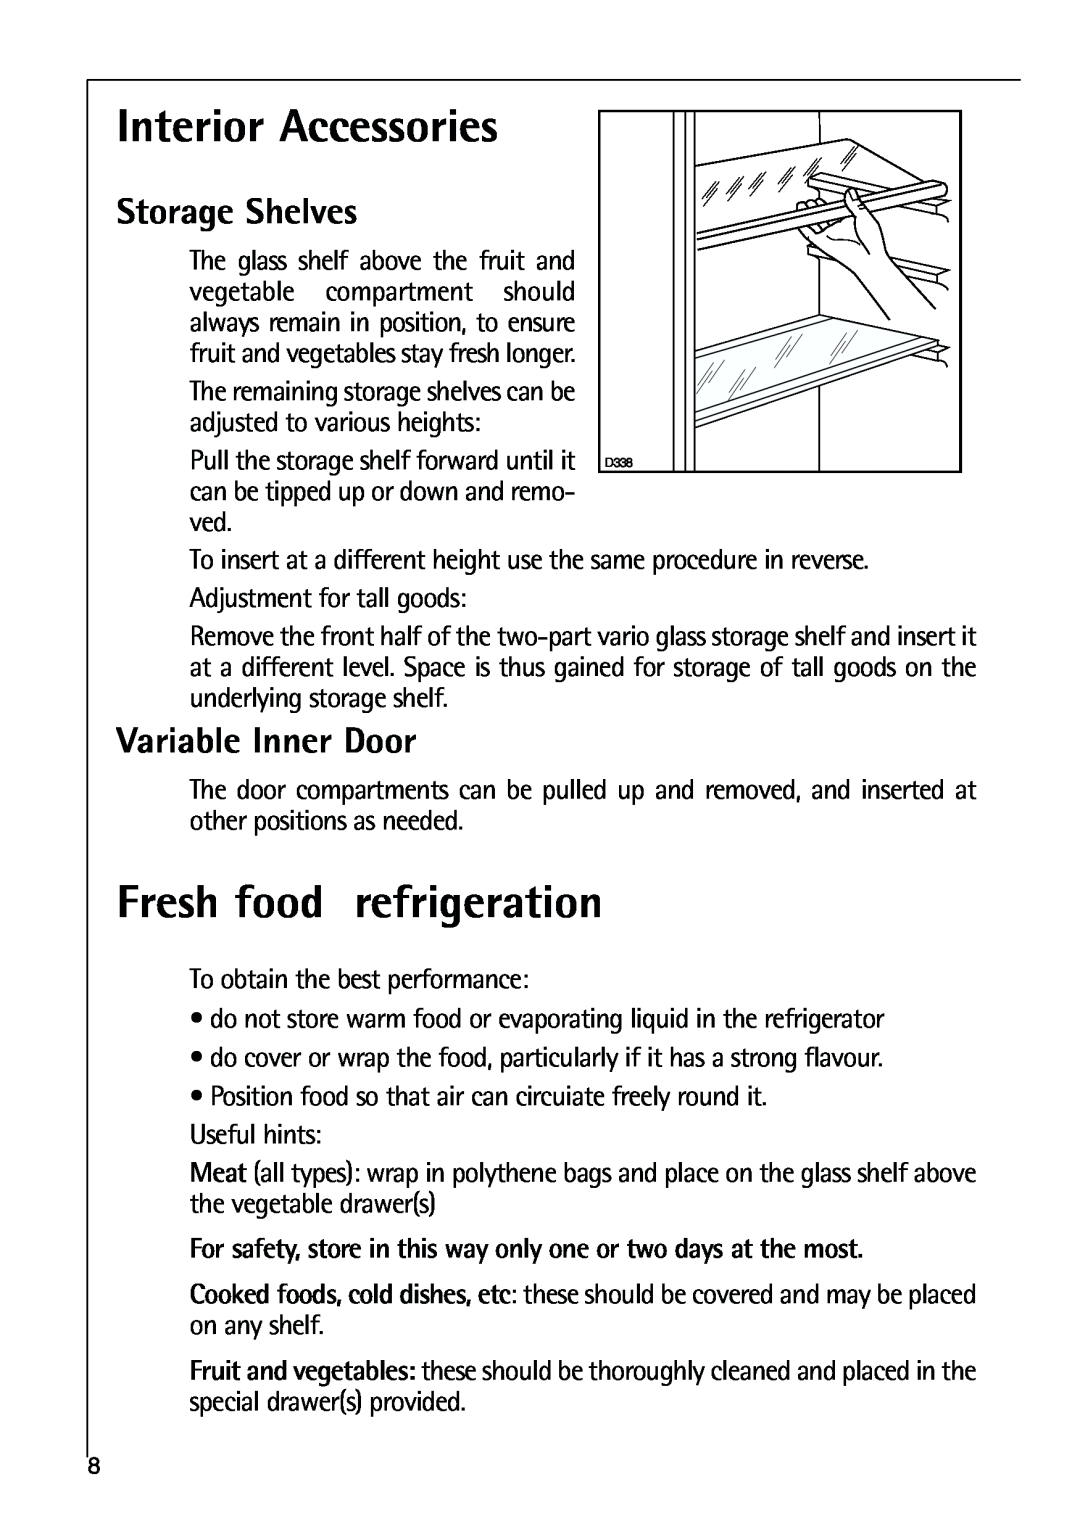 Parkinson Cowan SANTO K 40-5i Interior Accessories, Fresh food refrigeration, Storage Shelves, Variable Inner Door 